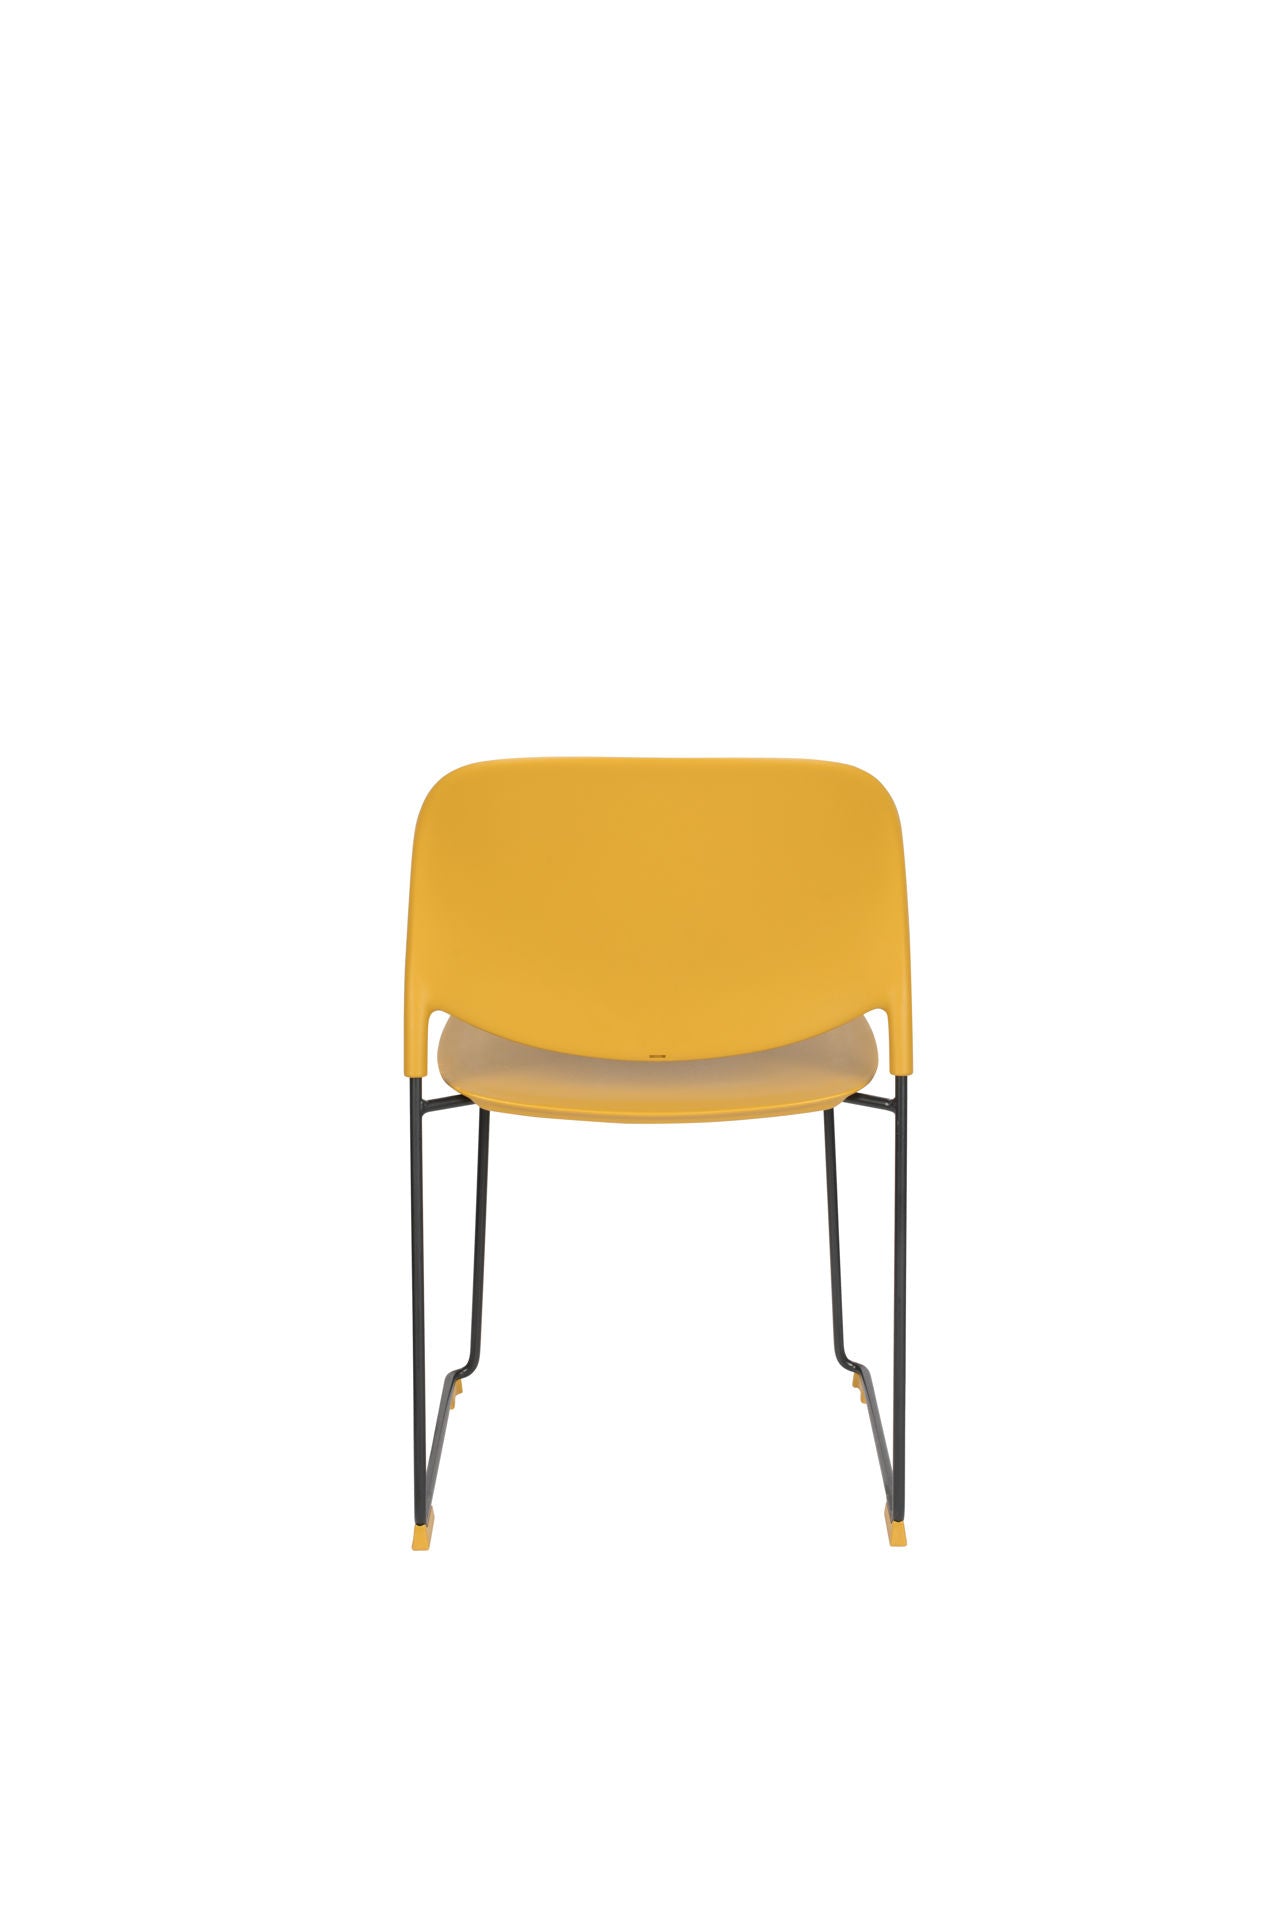 Nancy's North Madison Chair - Retro - Ochrrre, Zwart - Polypropyleen, Staal, Kunststof - 52,5 cm x 48,5 cm x 80 cm